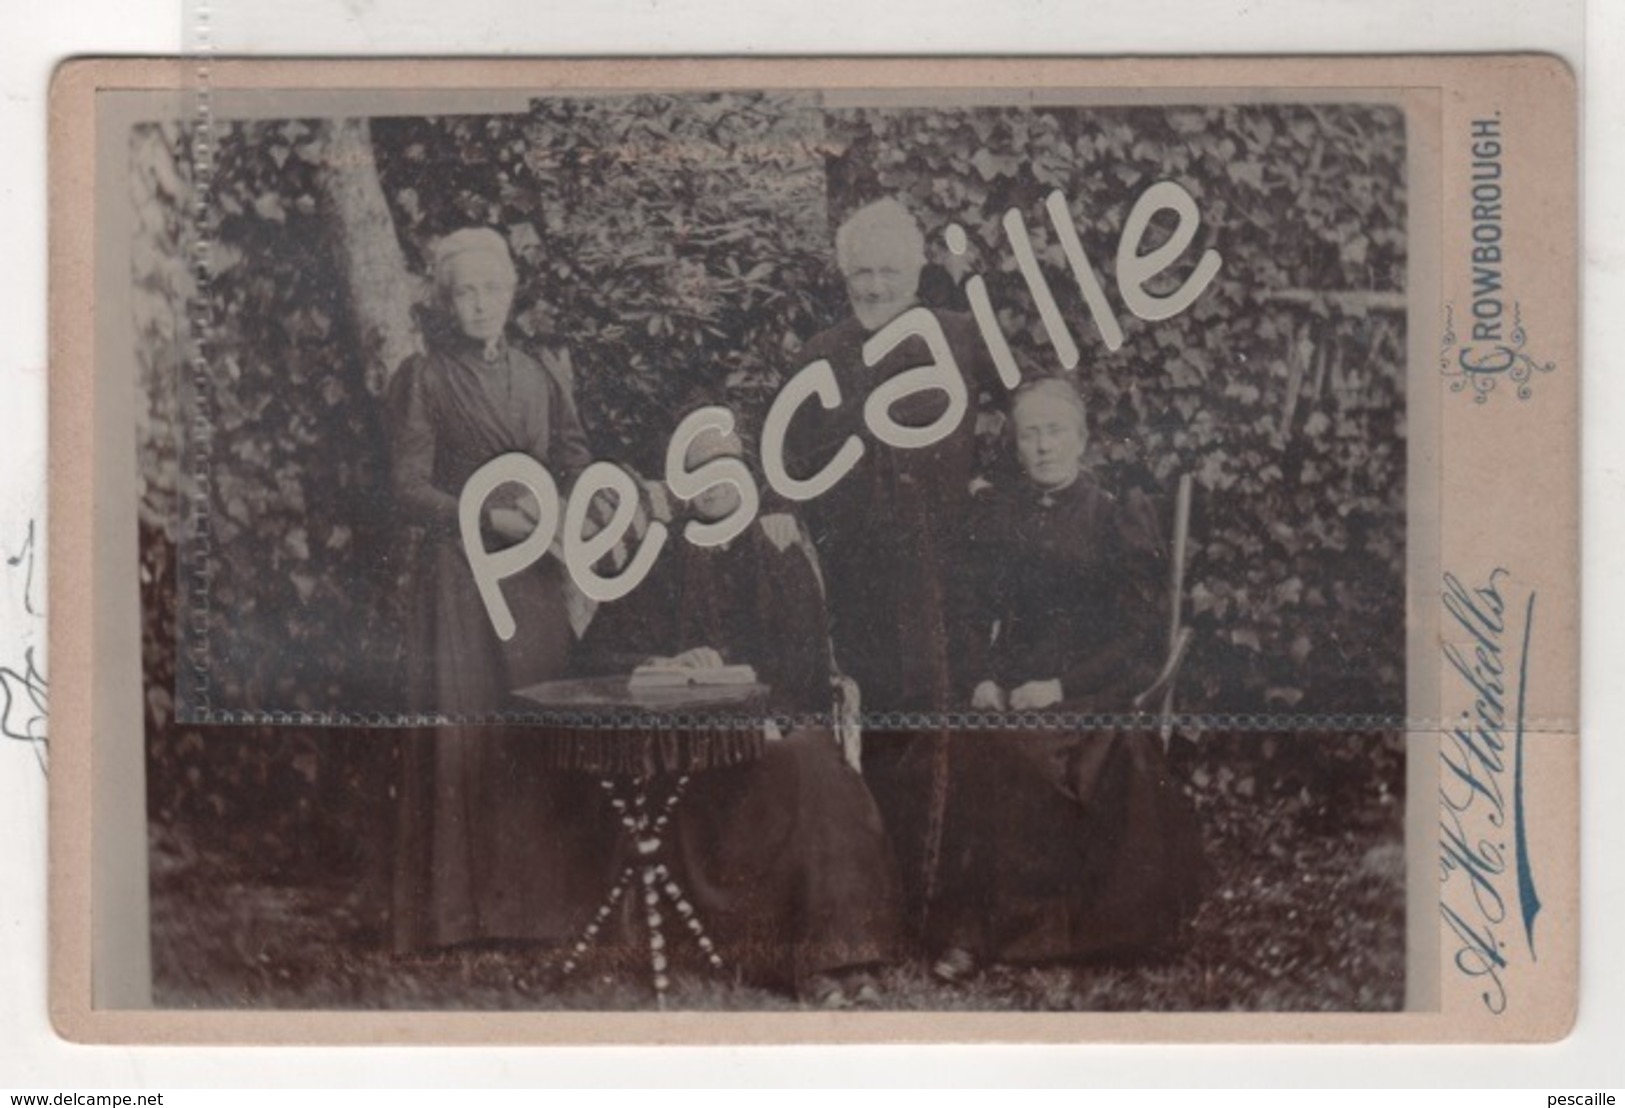 Wealden District Of East Sussex In The Weald- PHOTO ANIMEE UN HOMME TROIS FEMMES - A H.STICKELLS CROWBOROUGH - CARTONNEE - Anciennes (Av. 1900)